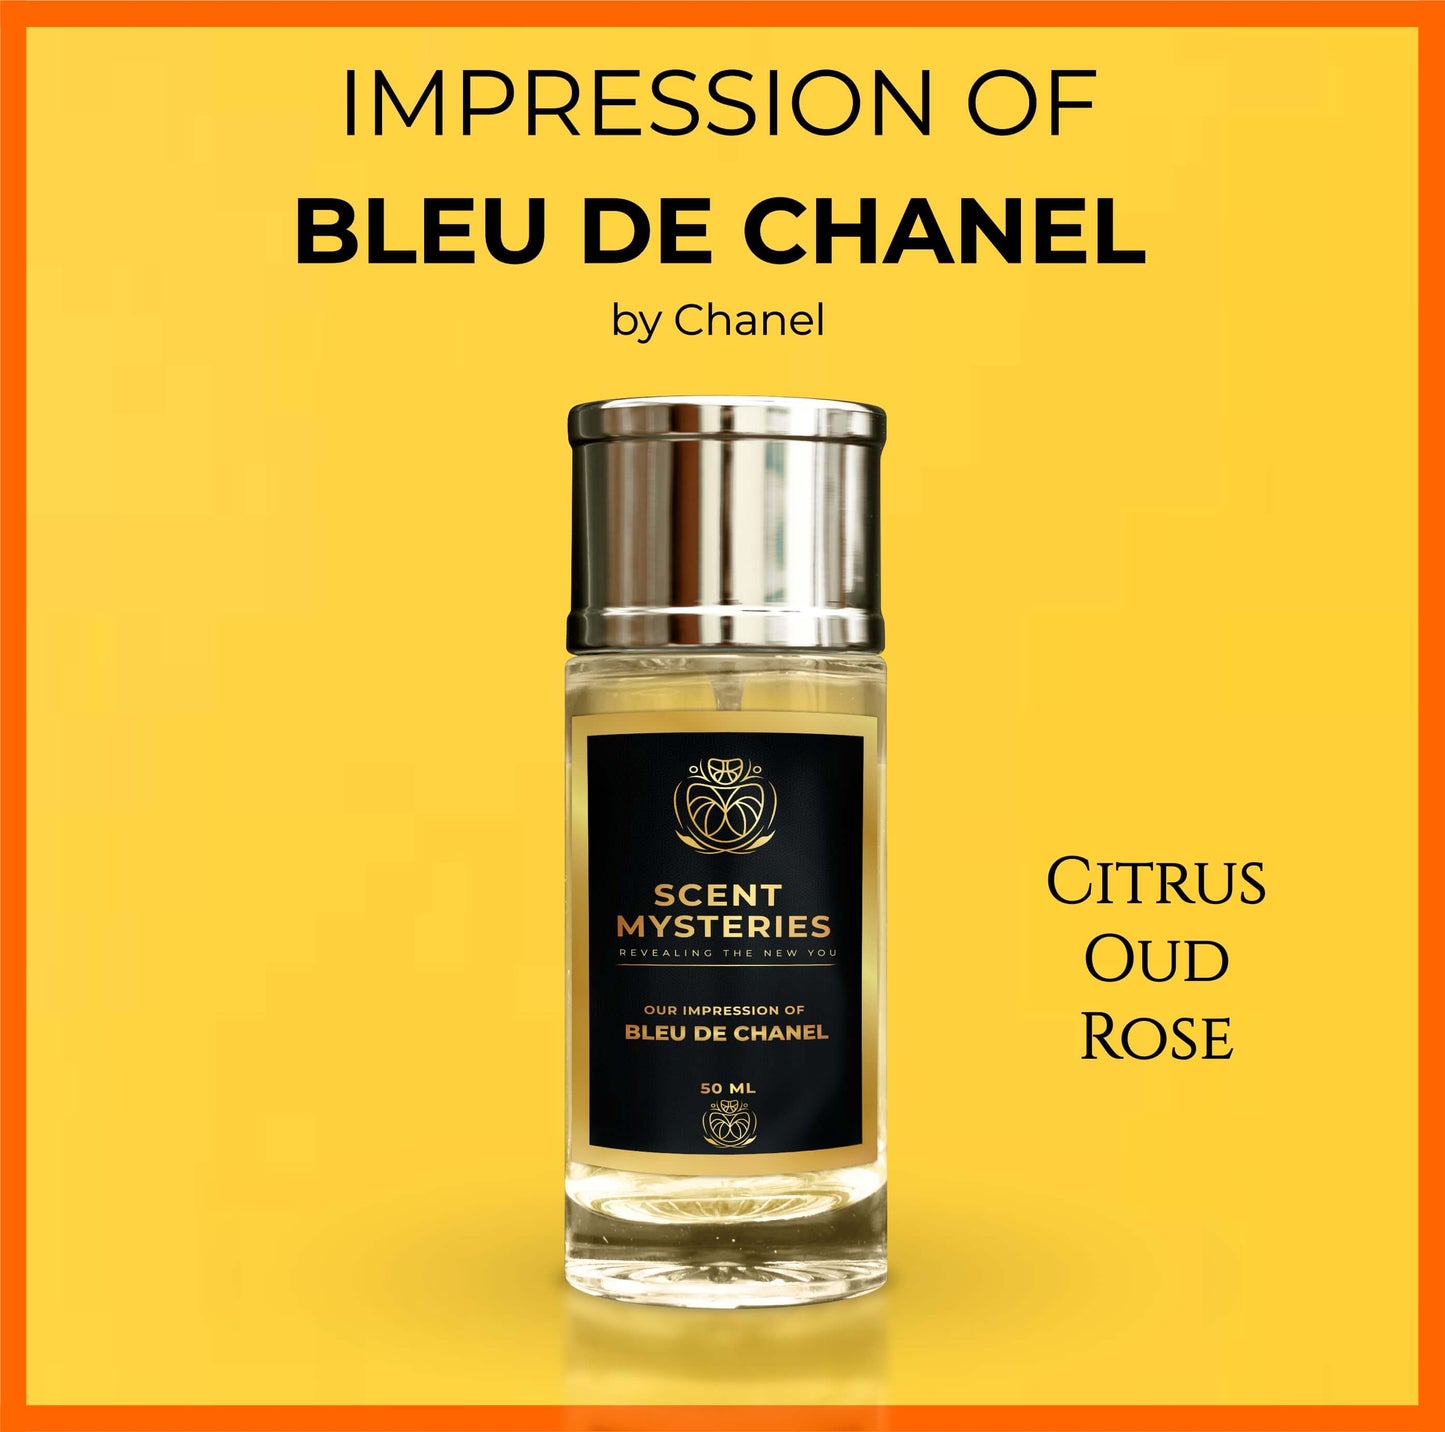 Impression of Bleu de Chanel